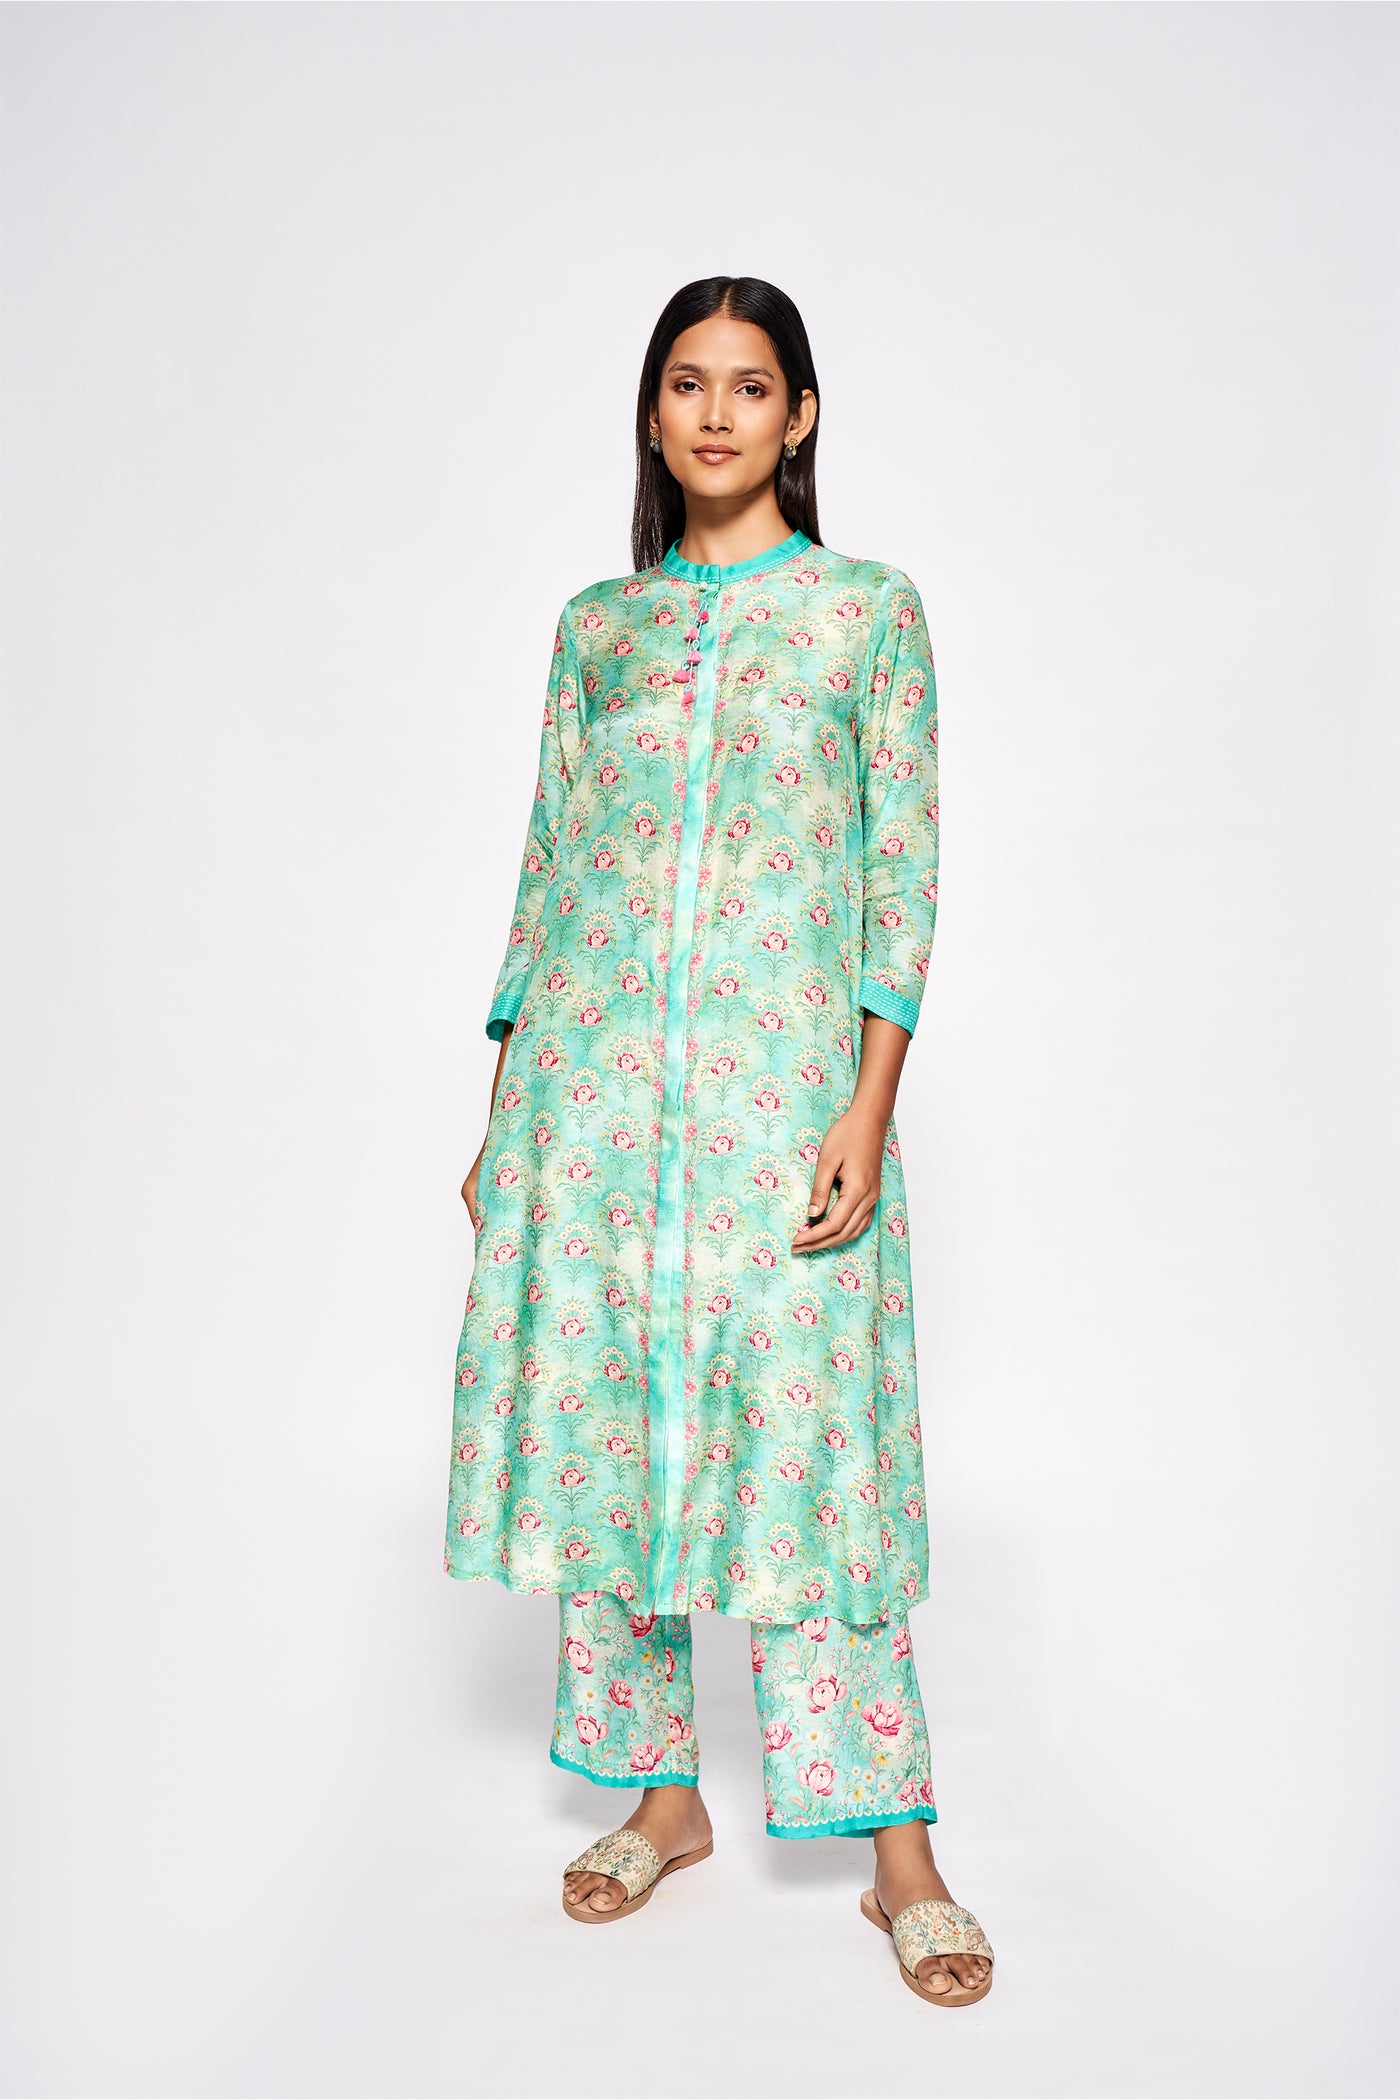 Anita Dongre Bamini Set Aqua festive indian designer wear online shopping melange singapore